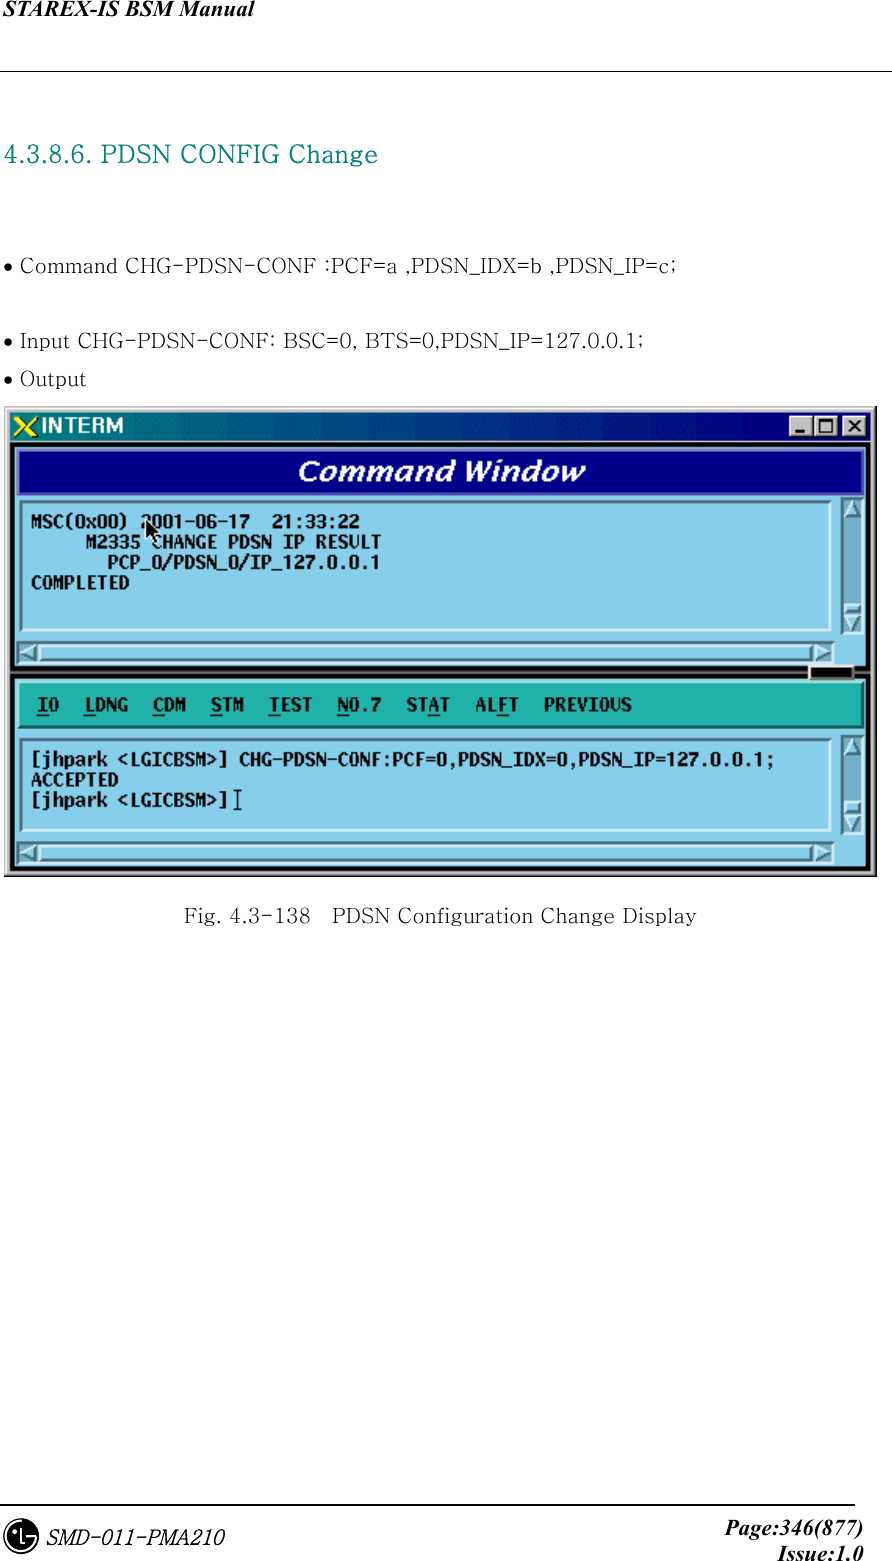 STAREX-IS BSM Manual     Page:346(877)Issue:1.0SMD-011-PMA210  4.3.8.6. PDSN CONFIG Change    • Command CHG-PDSN-CONF :PCF=a ,PDSN_IDX=b ,PDSN_IP=c;  • Input CHG-PDSN-CONF: BSC=0, BTS=0,PDSN_IP=127.0.0.1; • Output  Fig. 4.3-138    PDSN Configuration Change Display